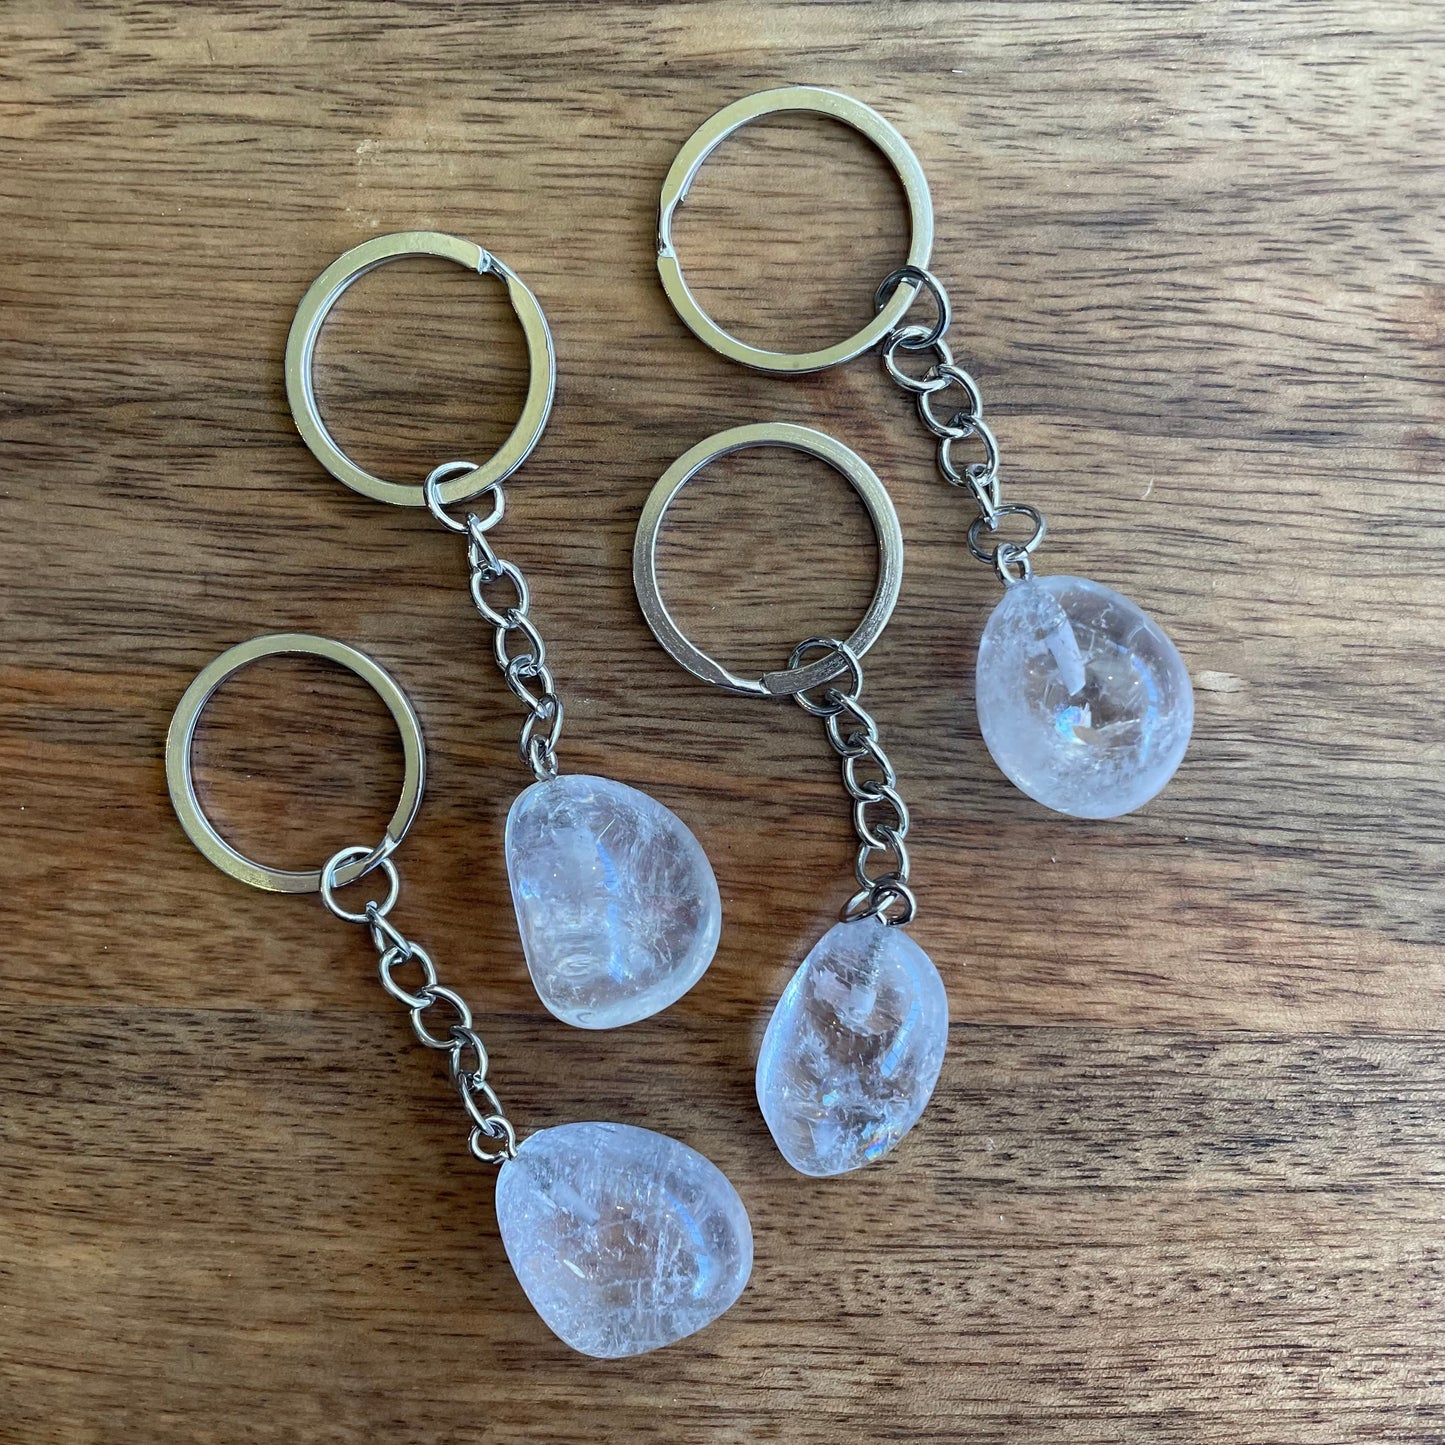 Polished clear quartz key ring - Assorted - Rivendell Shop